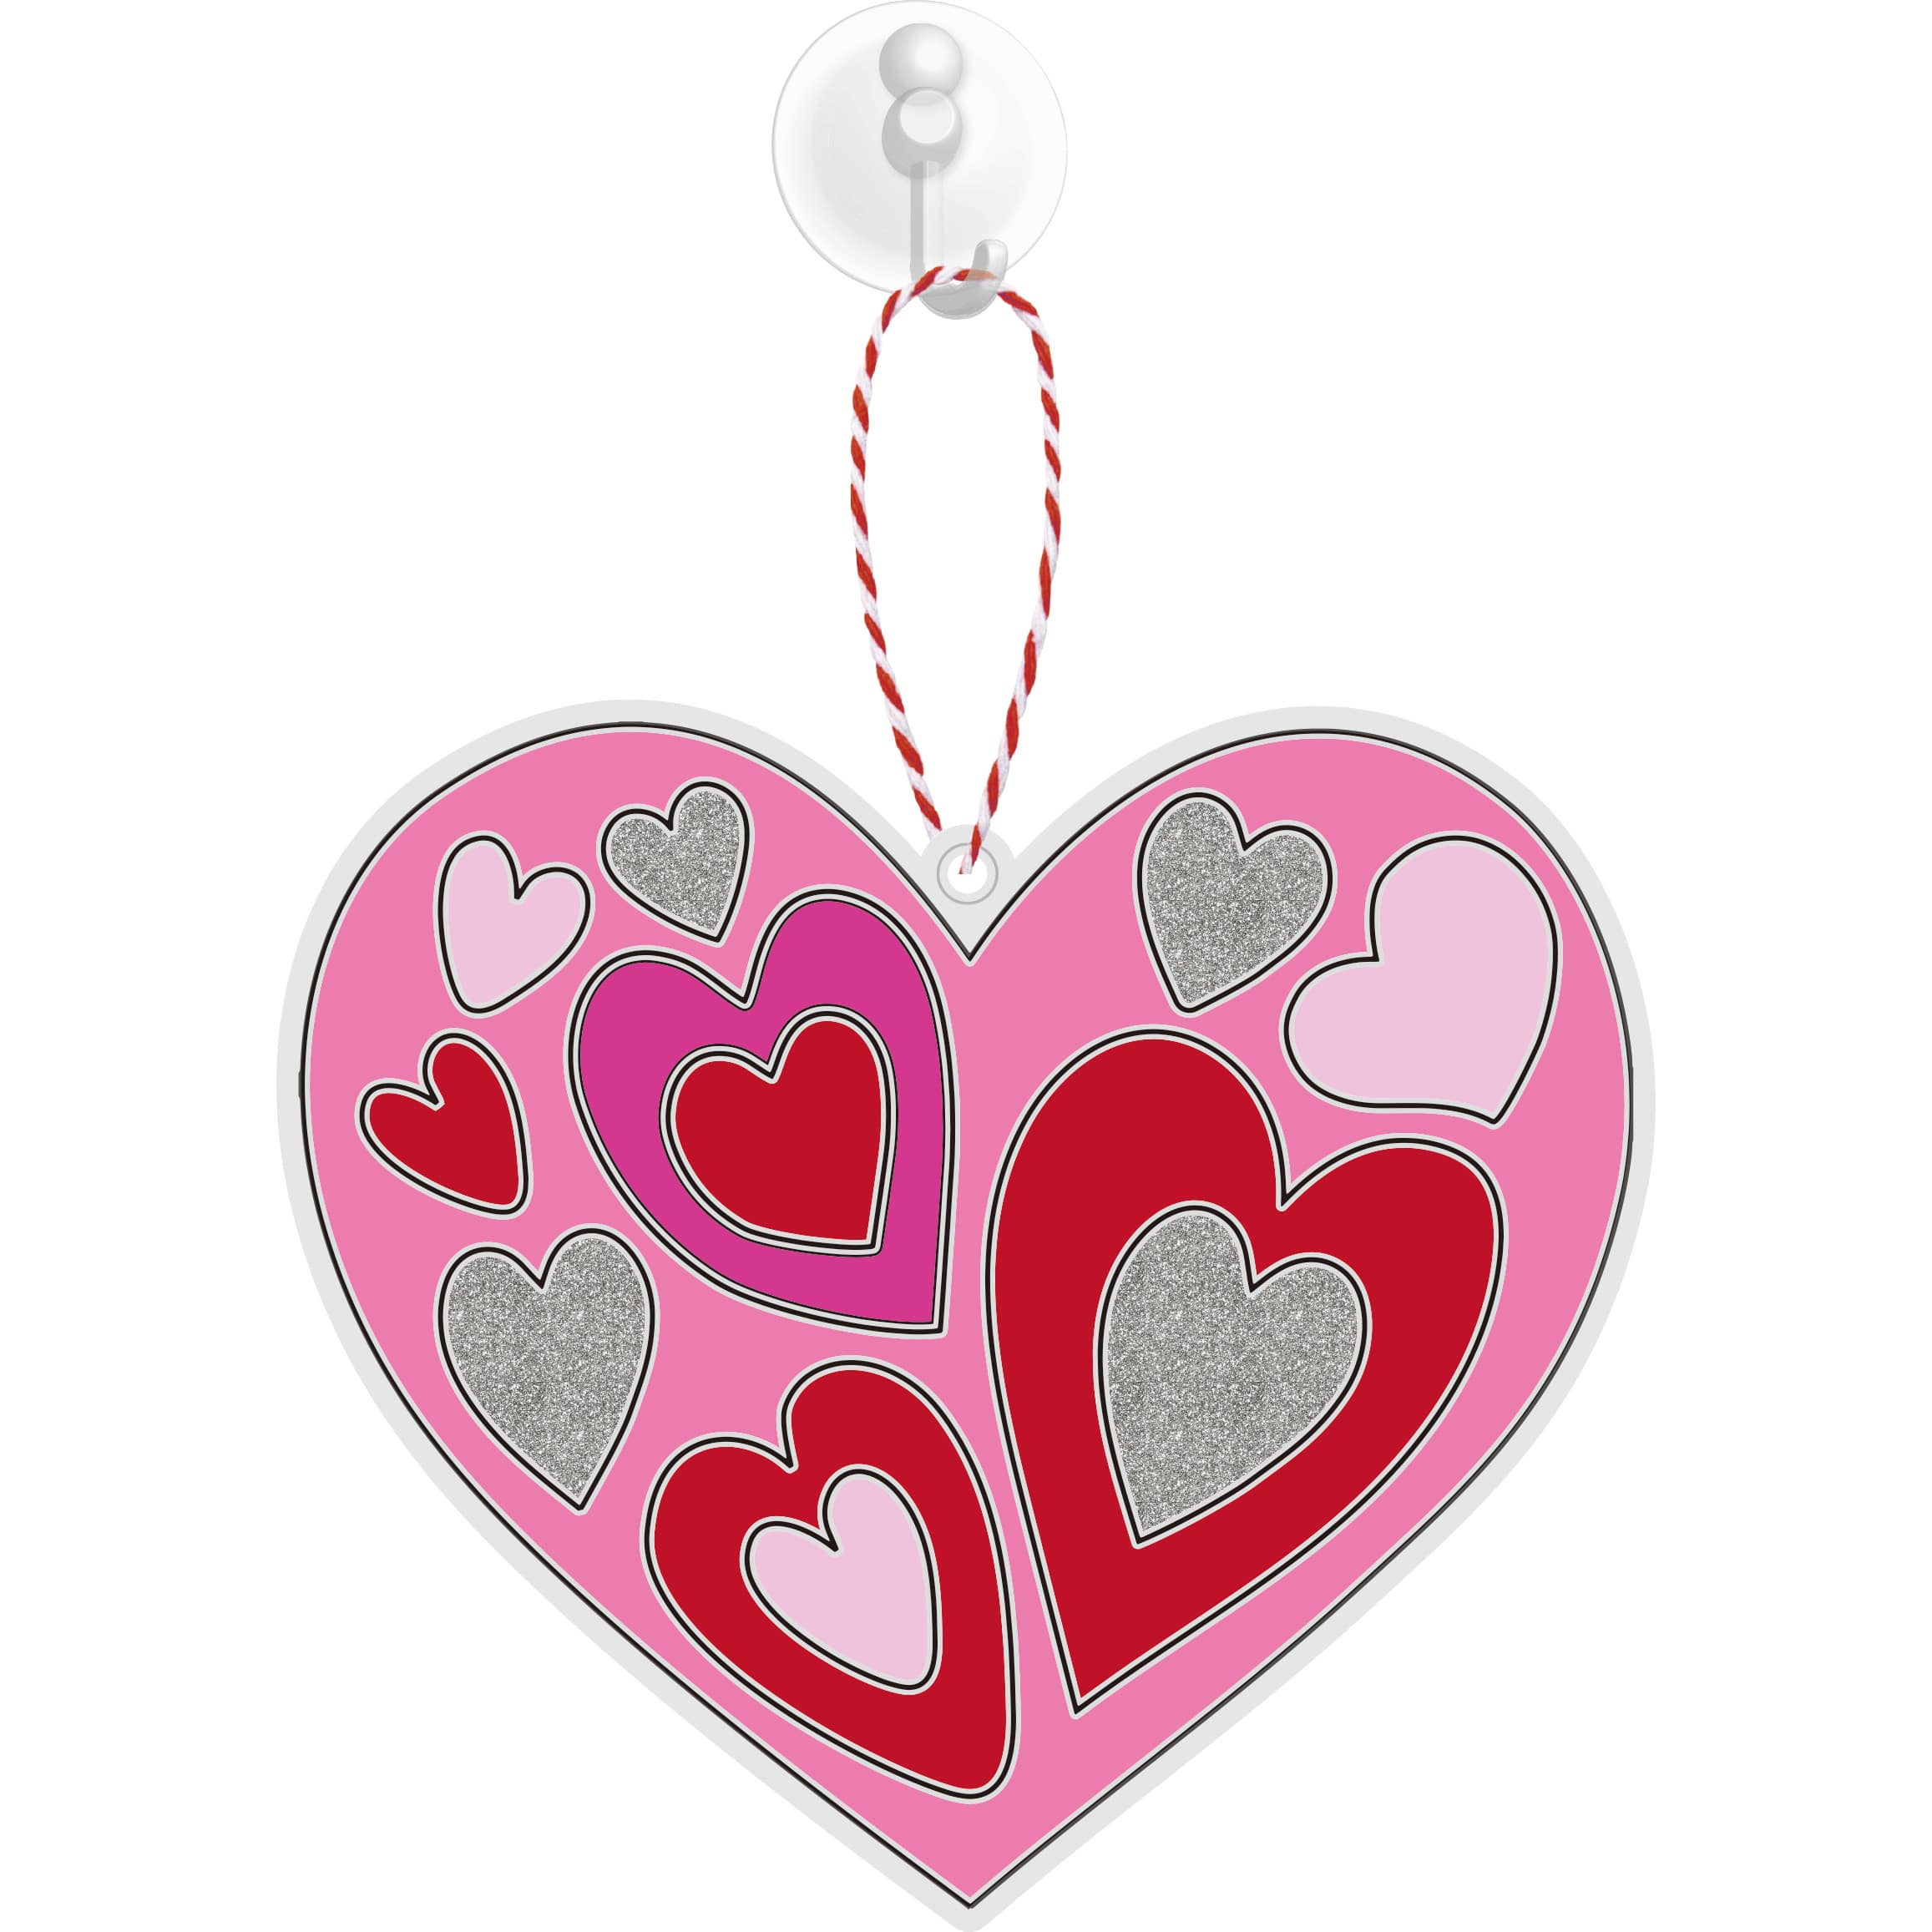 Valentine's Day Sentimental Glitter Heart Foam Stickers by Creatology™